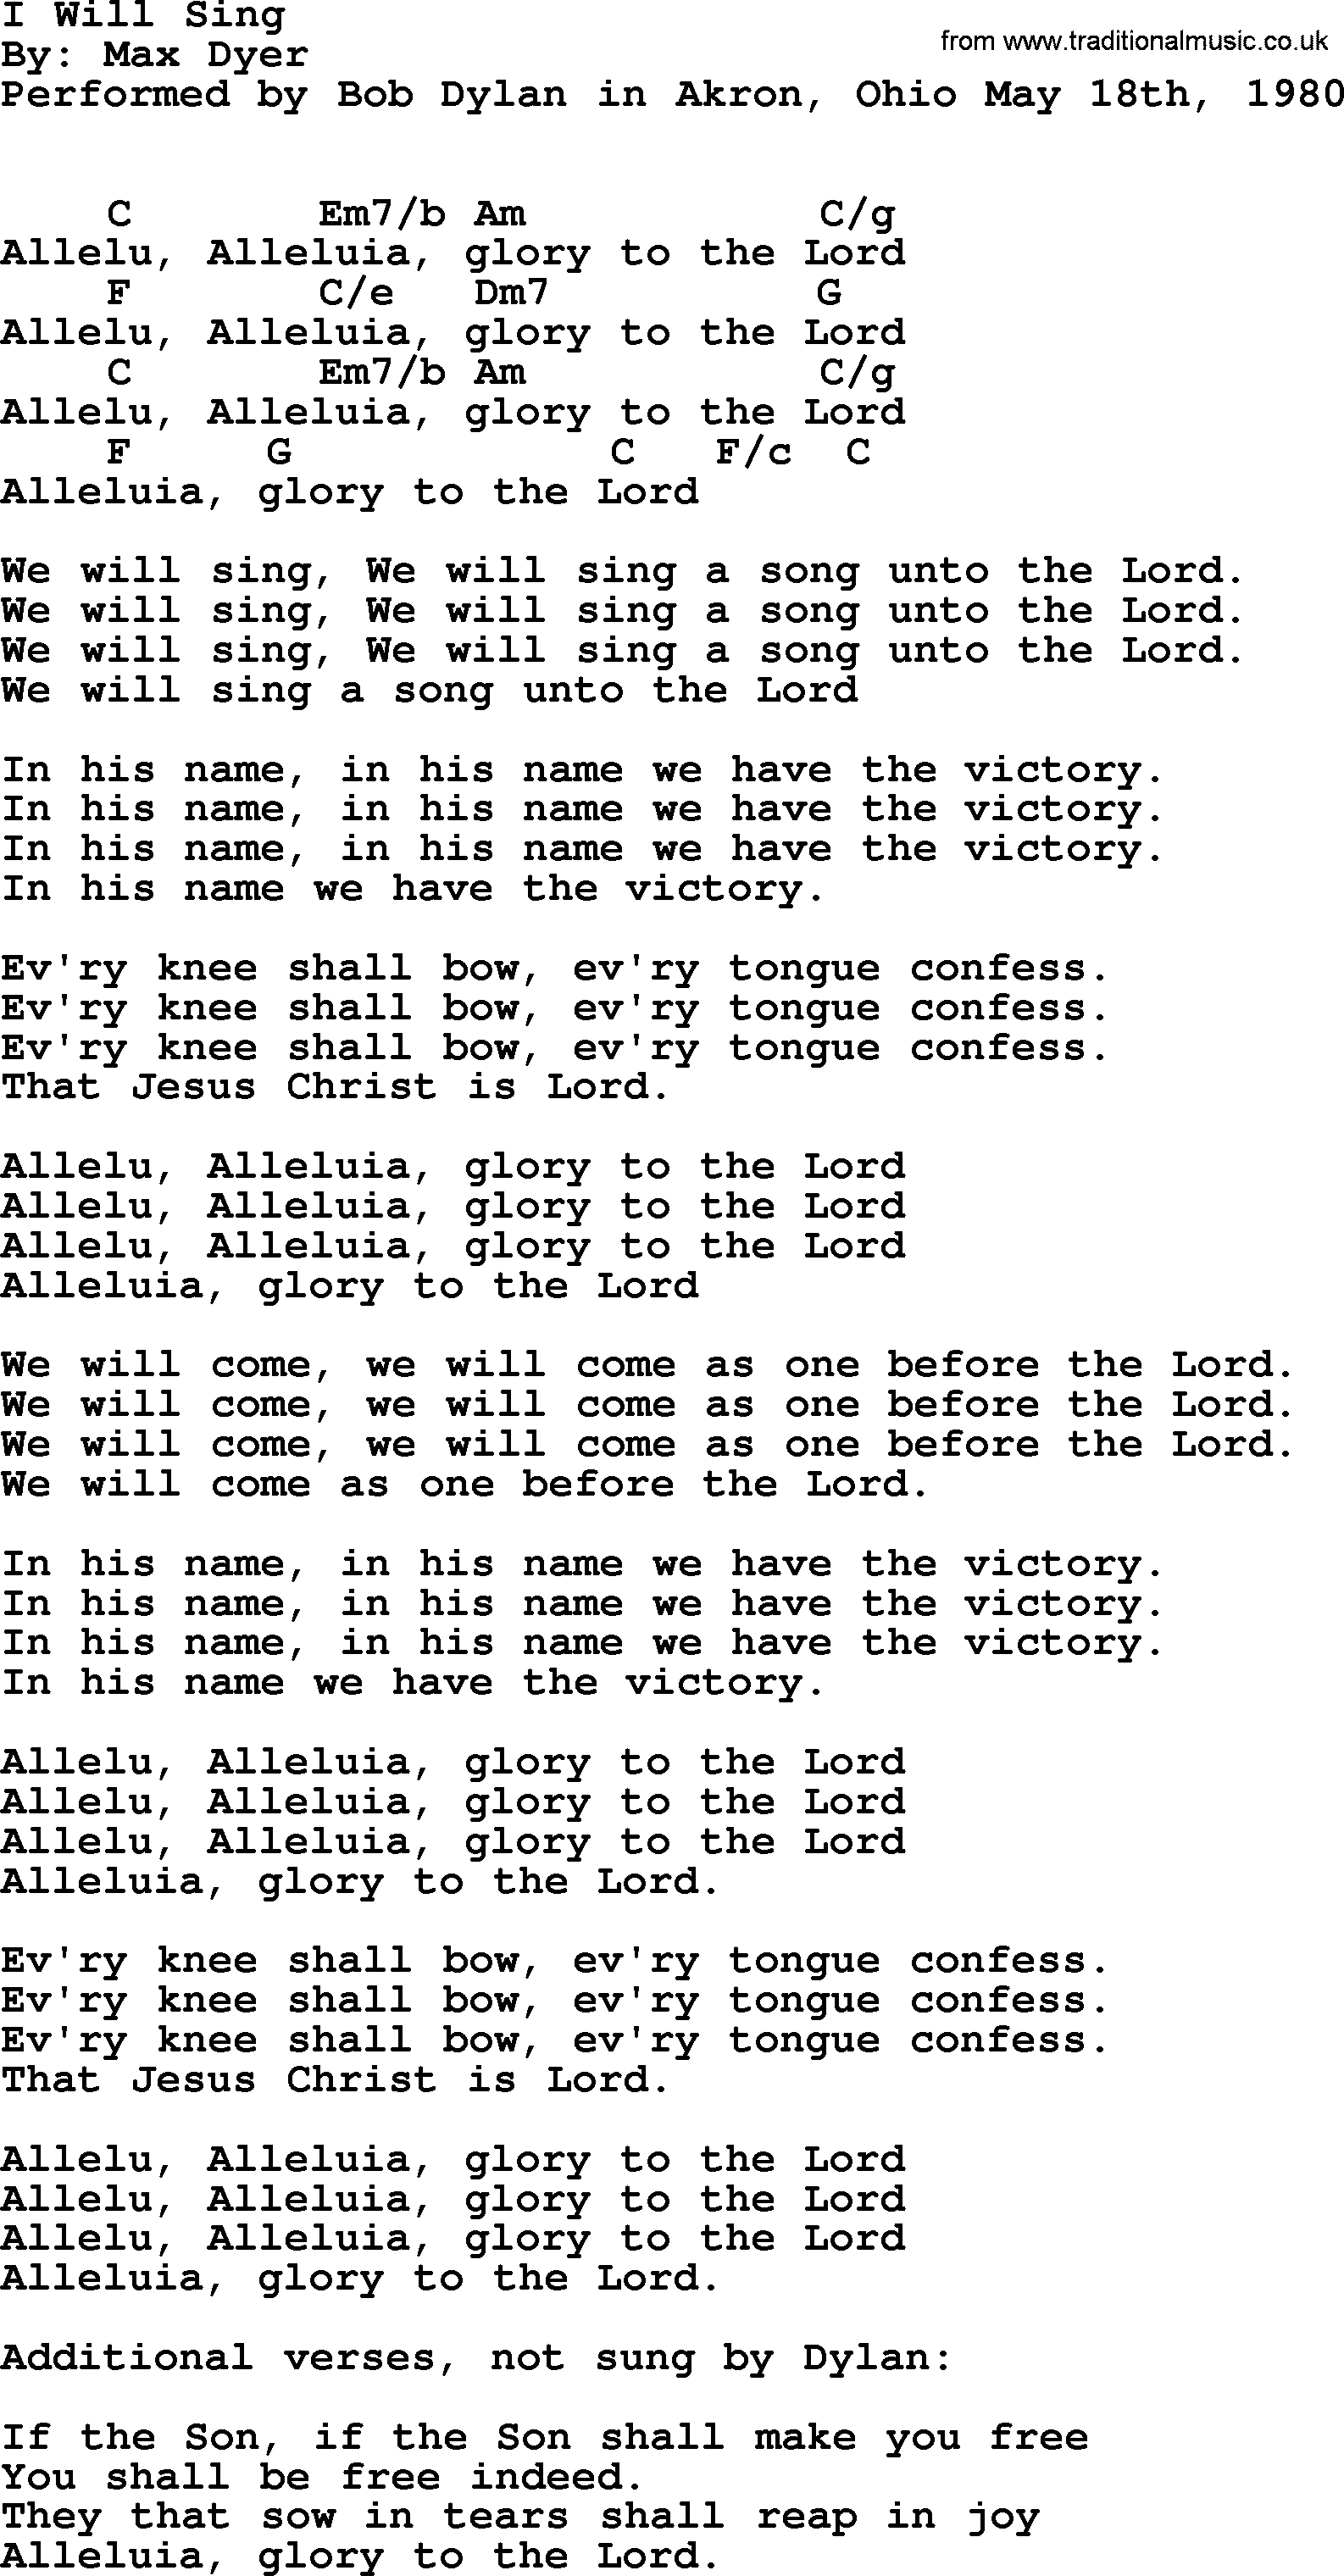 Bob Dylan song, lyrics with chords - I Will Sing